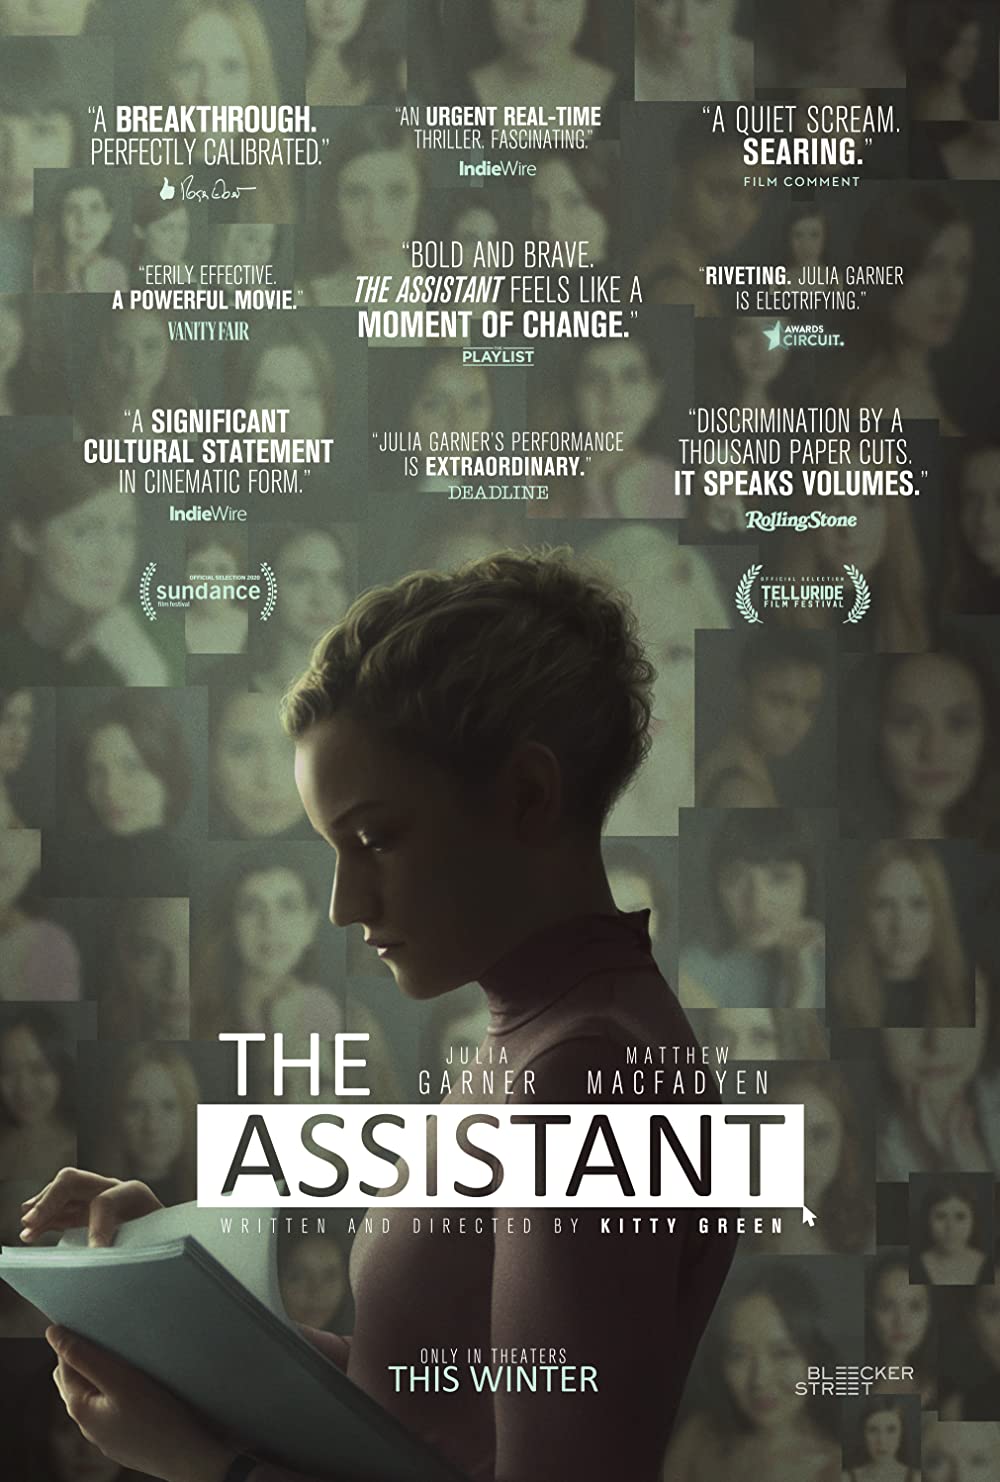 Filmbeschreibung zu The Assistant (OV)